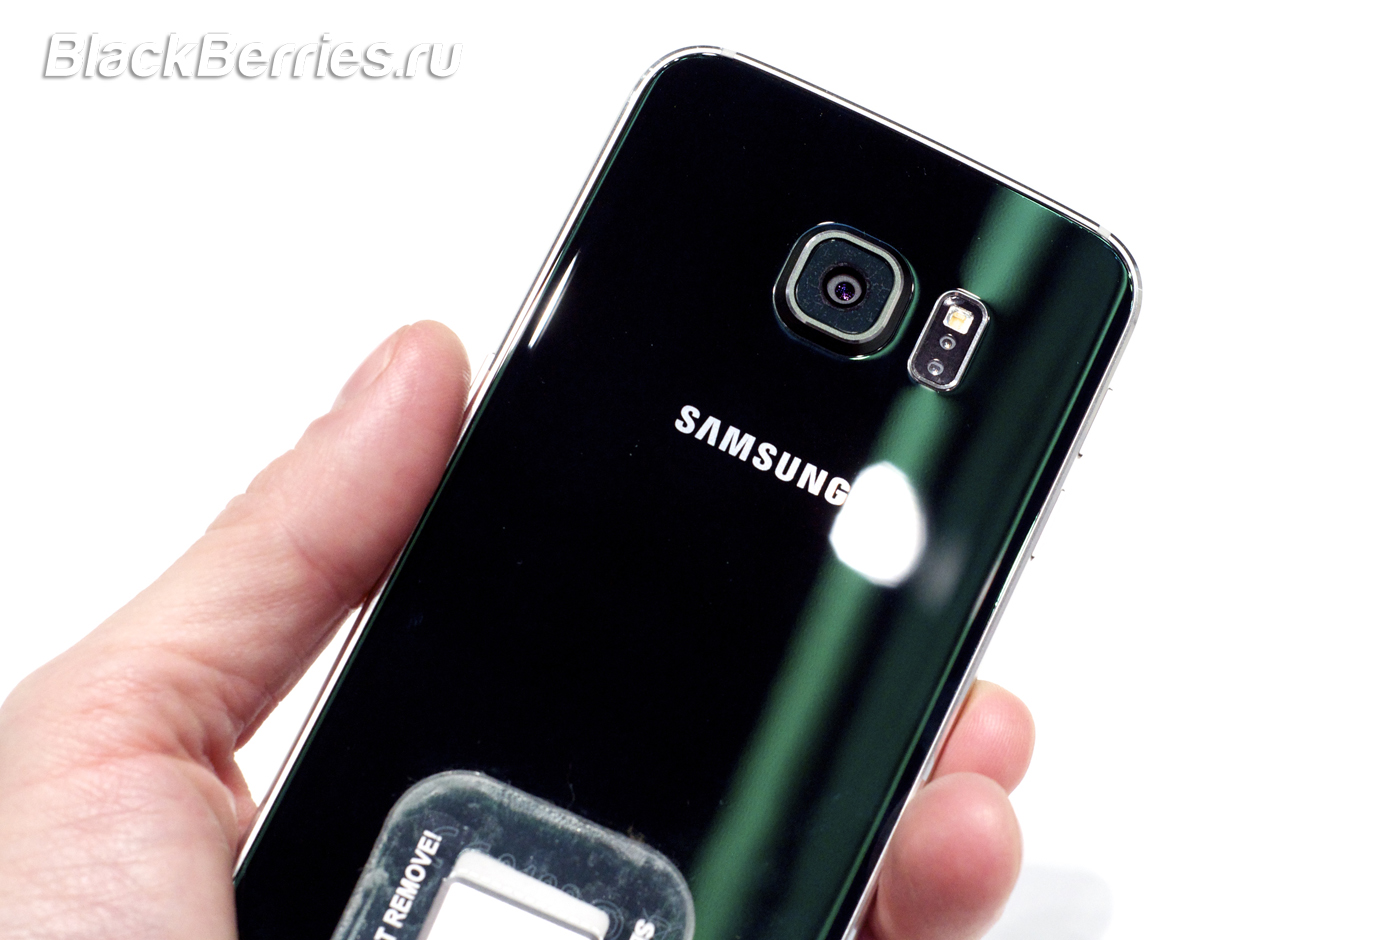 Samsung-S6-edge-MWC2015-01